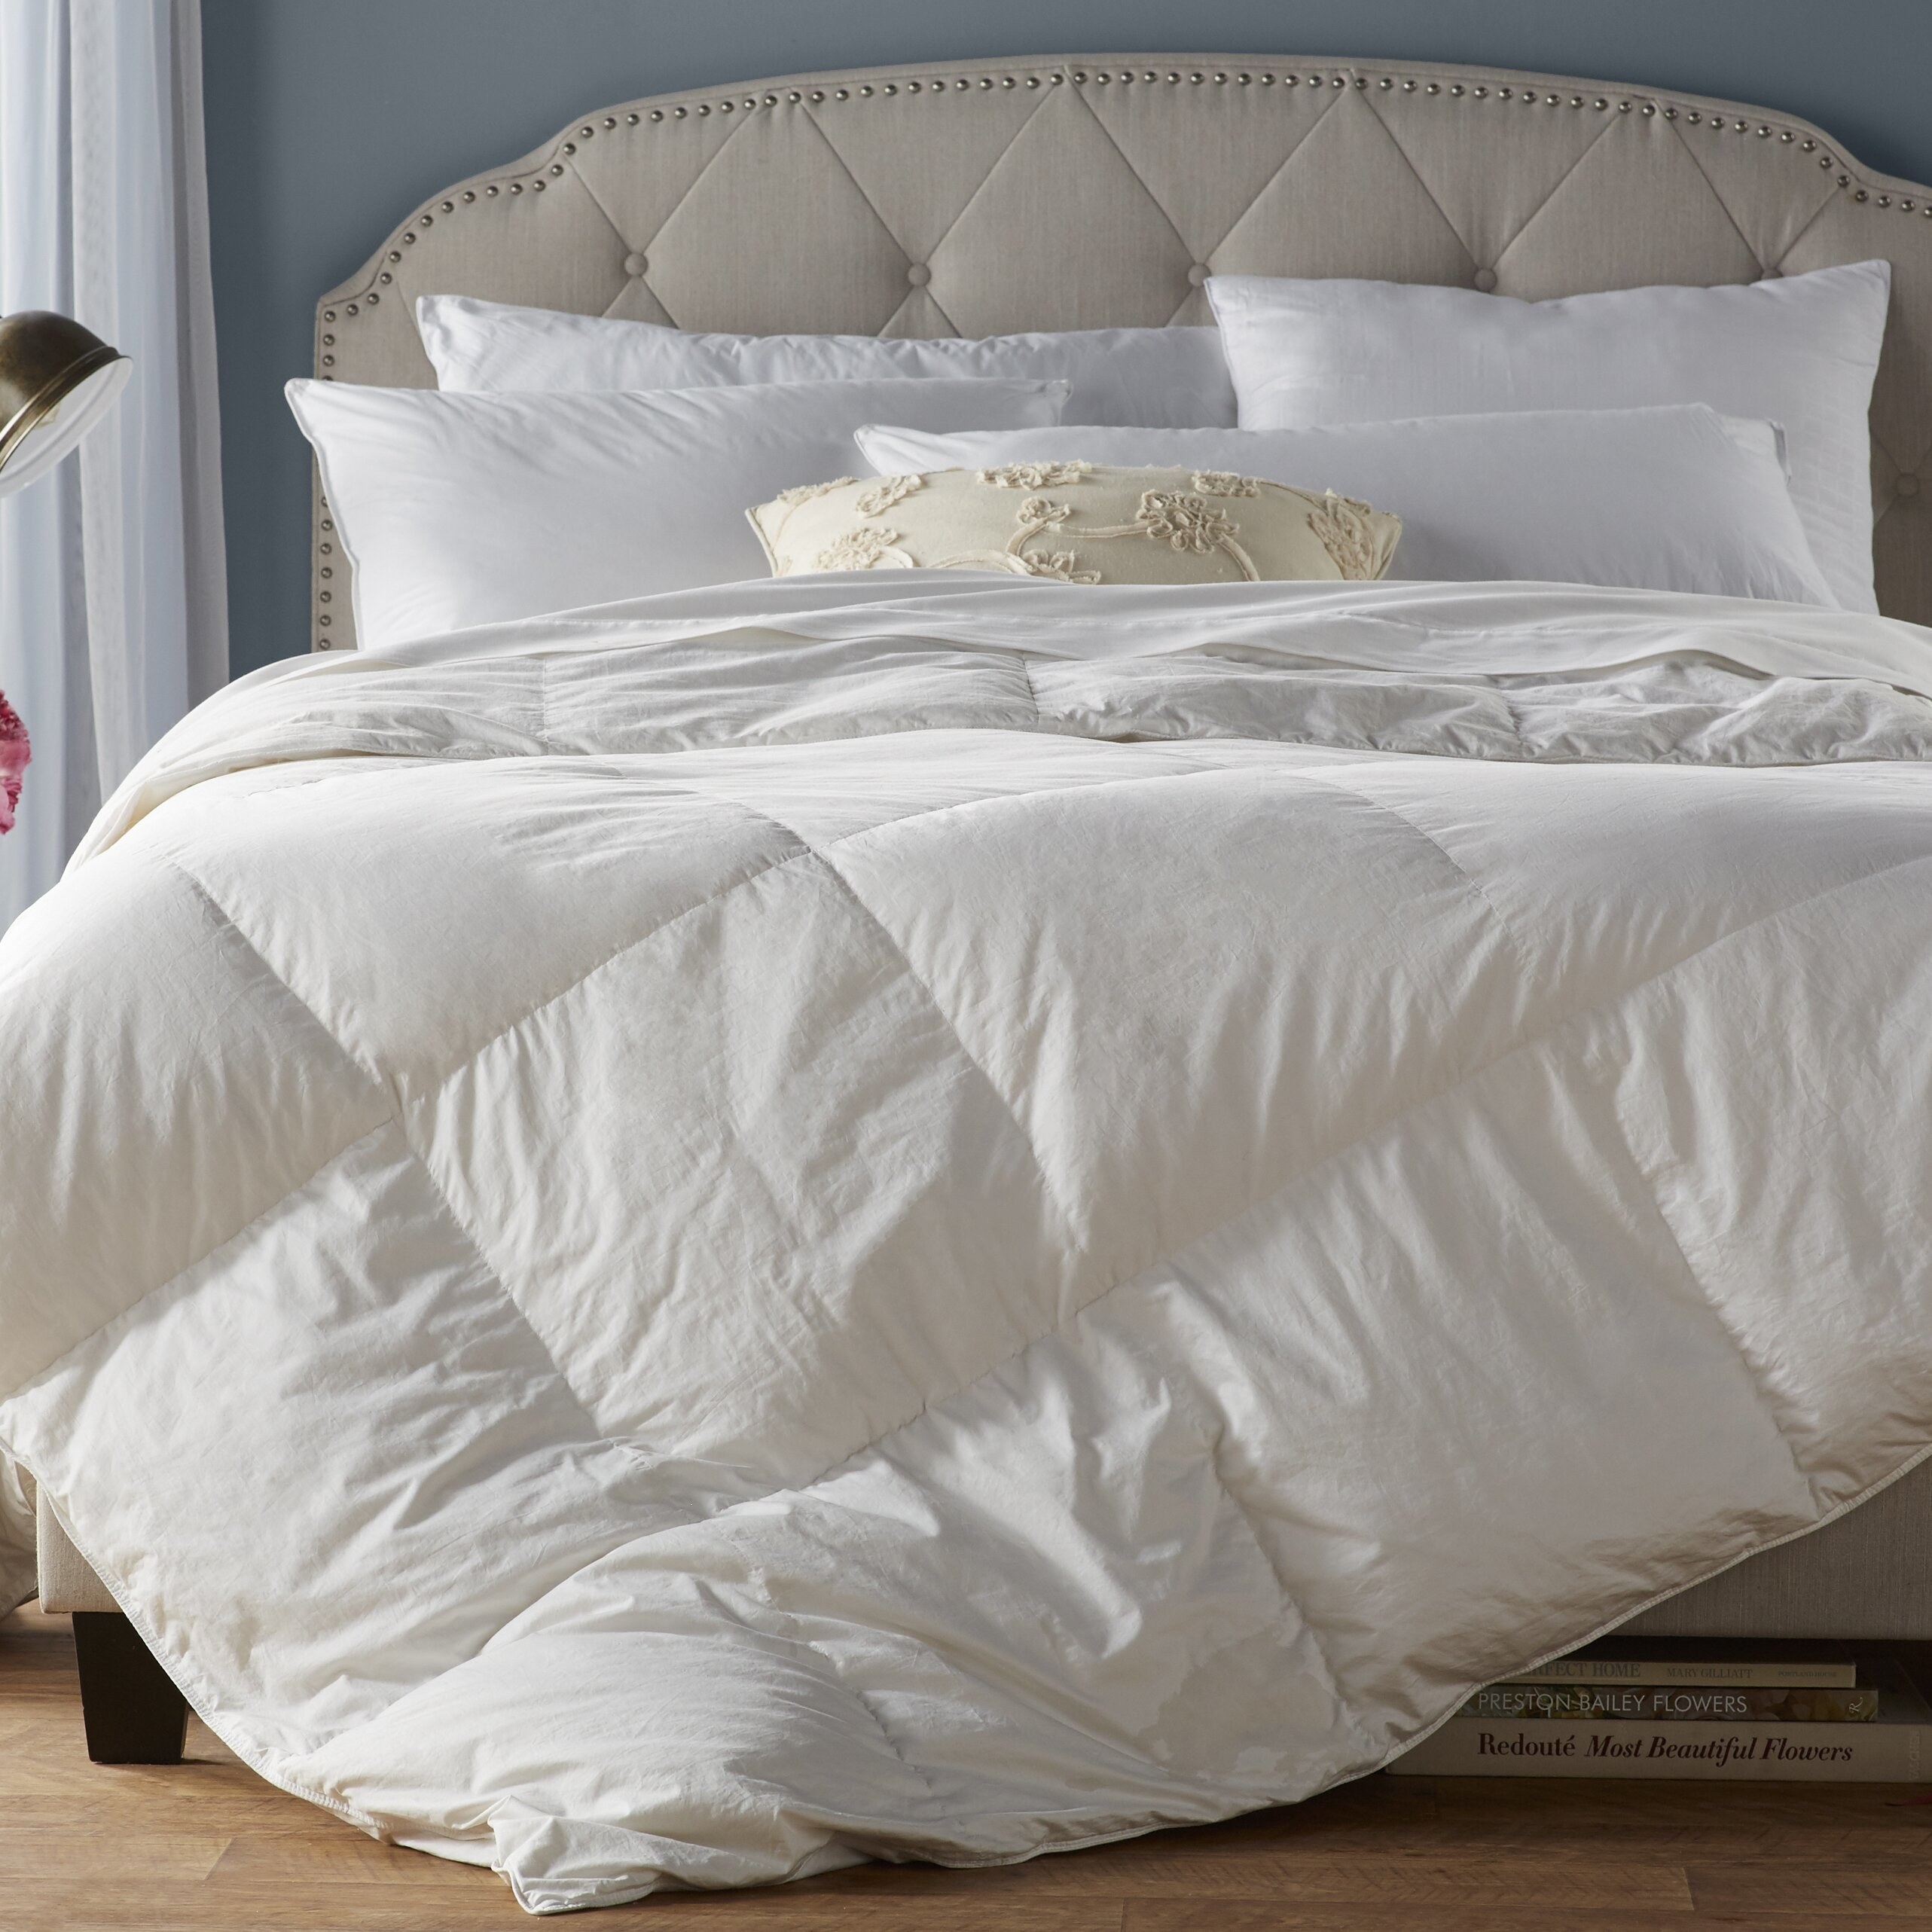 An image of a white all-season down alternative comforter